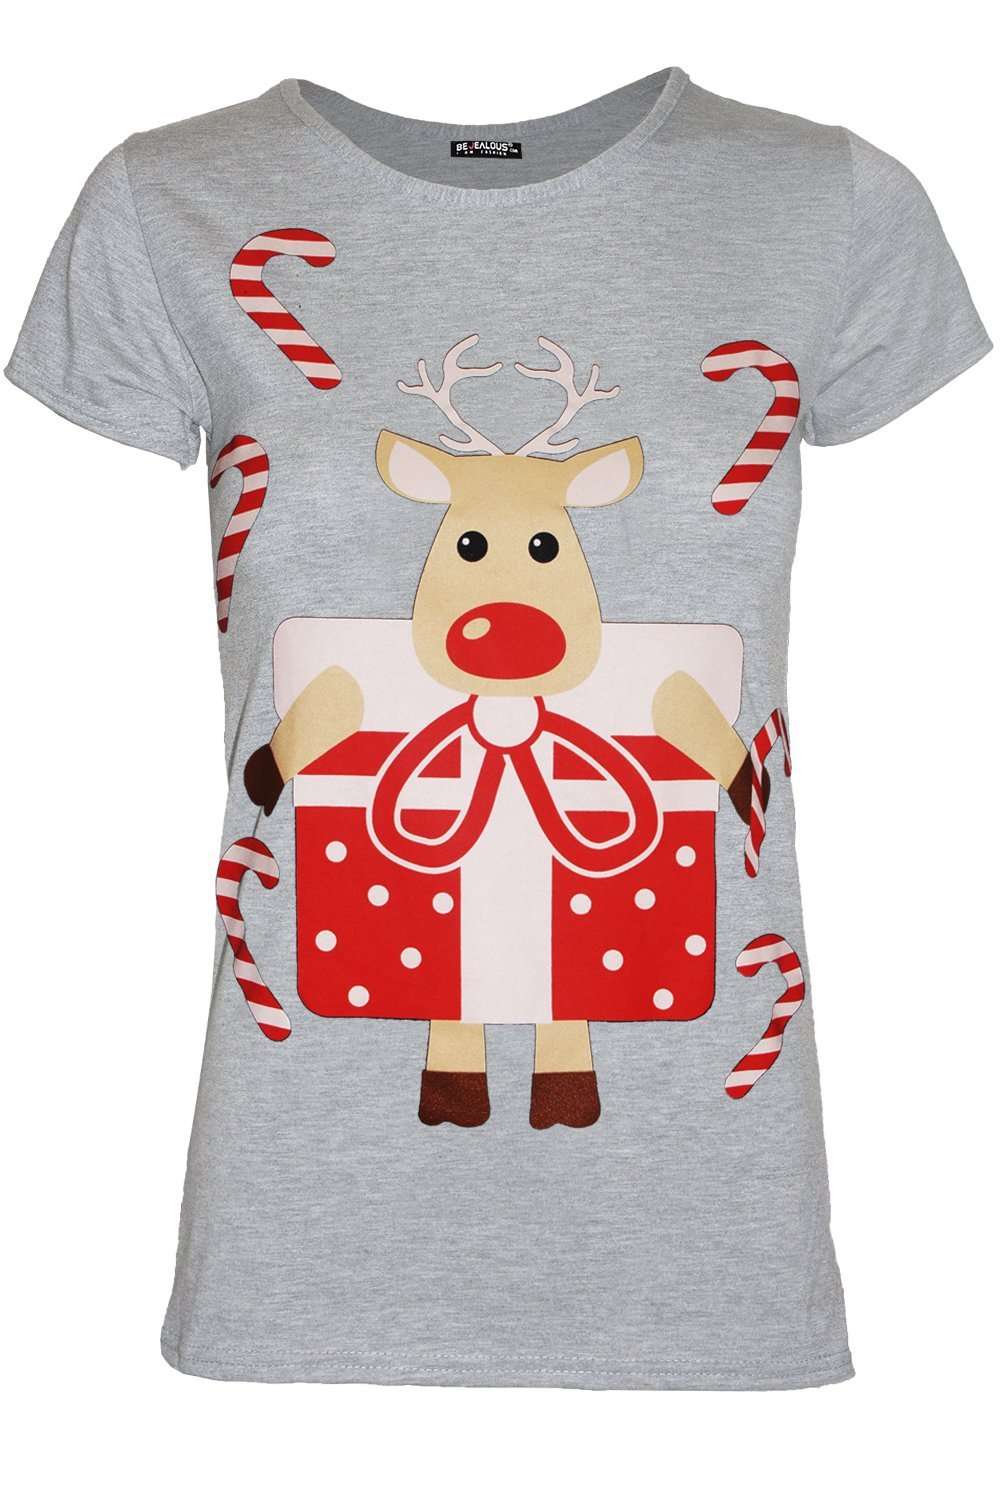 Christmas Reindeer Graphic Tshirt - bejealous-com